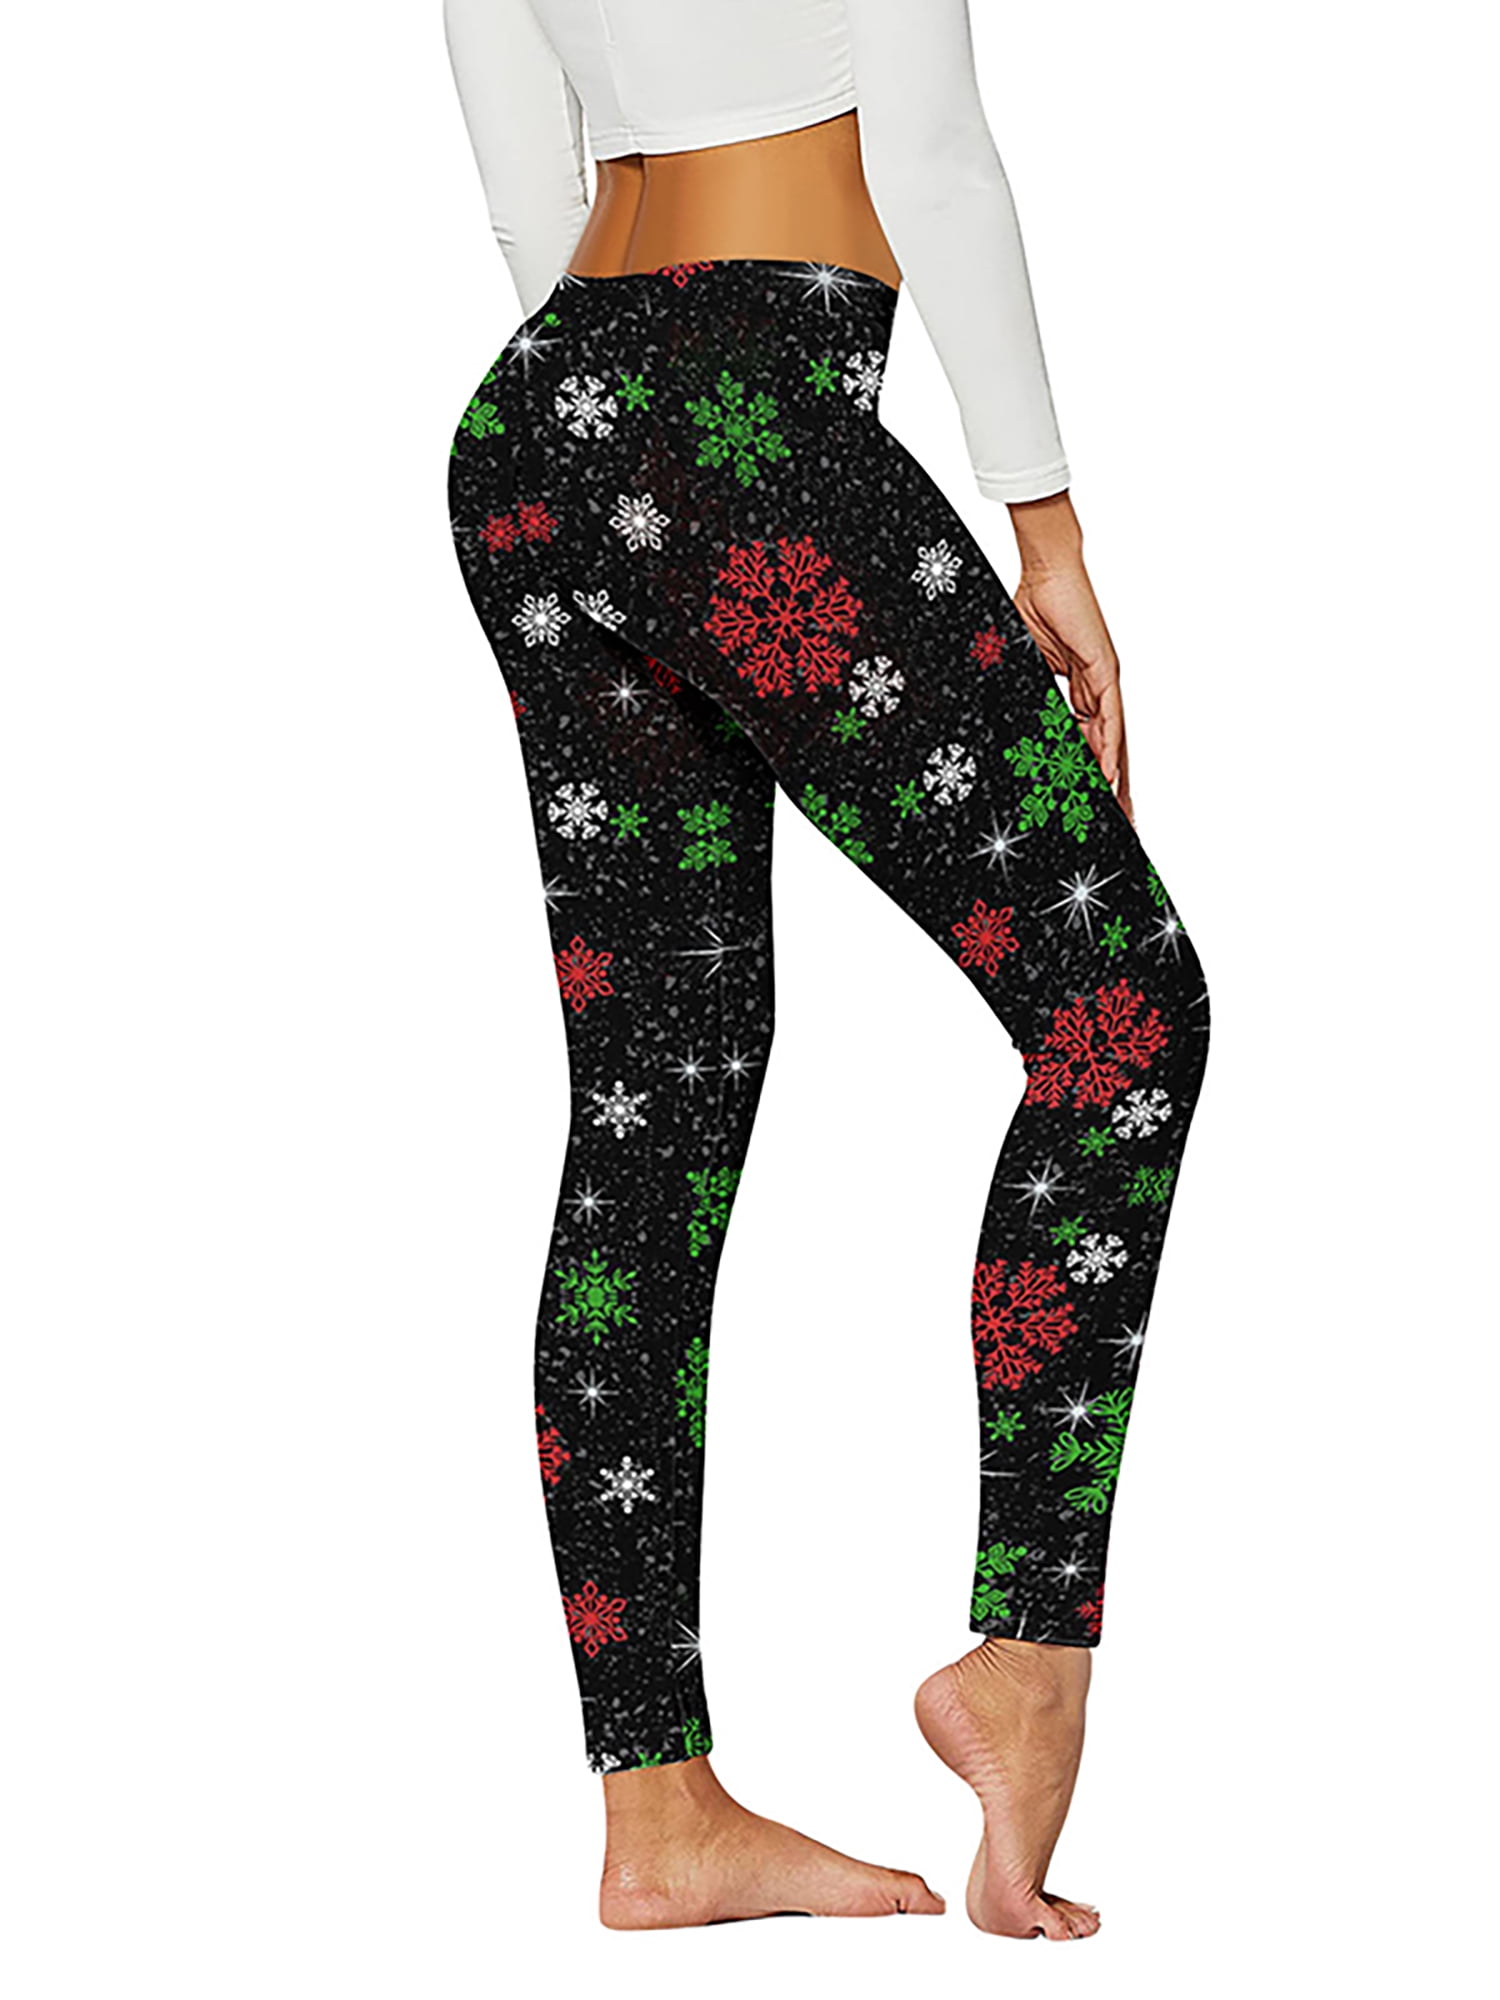 Kids Girls Snowflake Printed Full Length Fashion Christmas Leggings pants